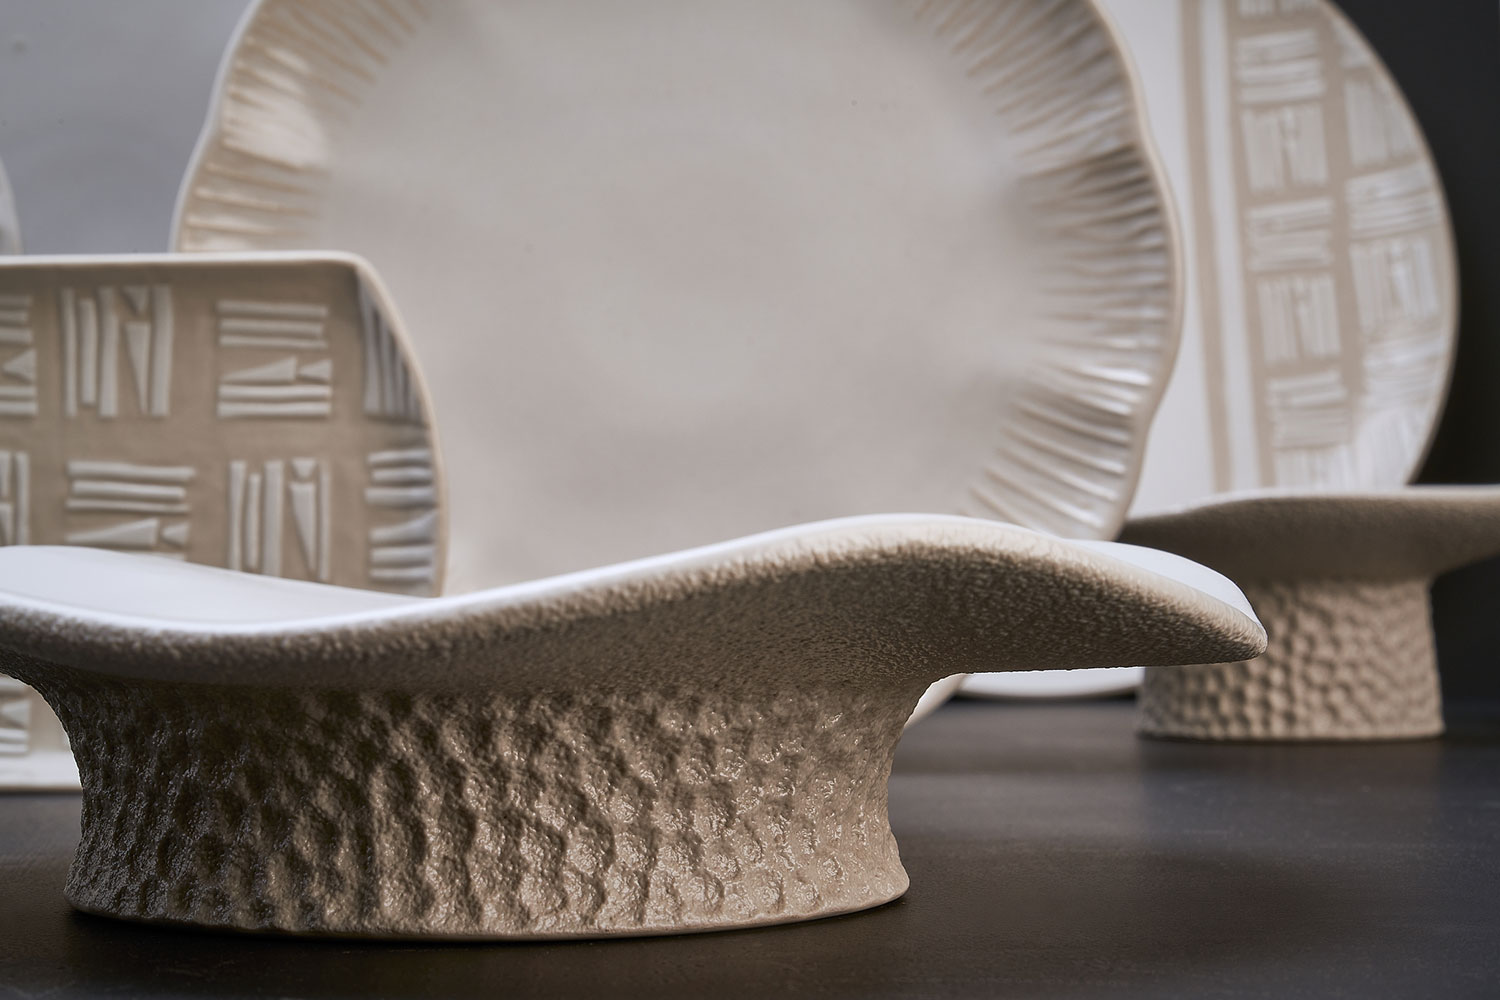 Kevala Ceramics in partnership with St.Regis Hotel Jakarta